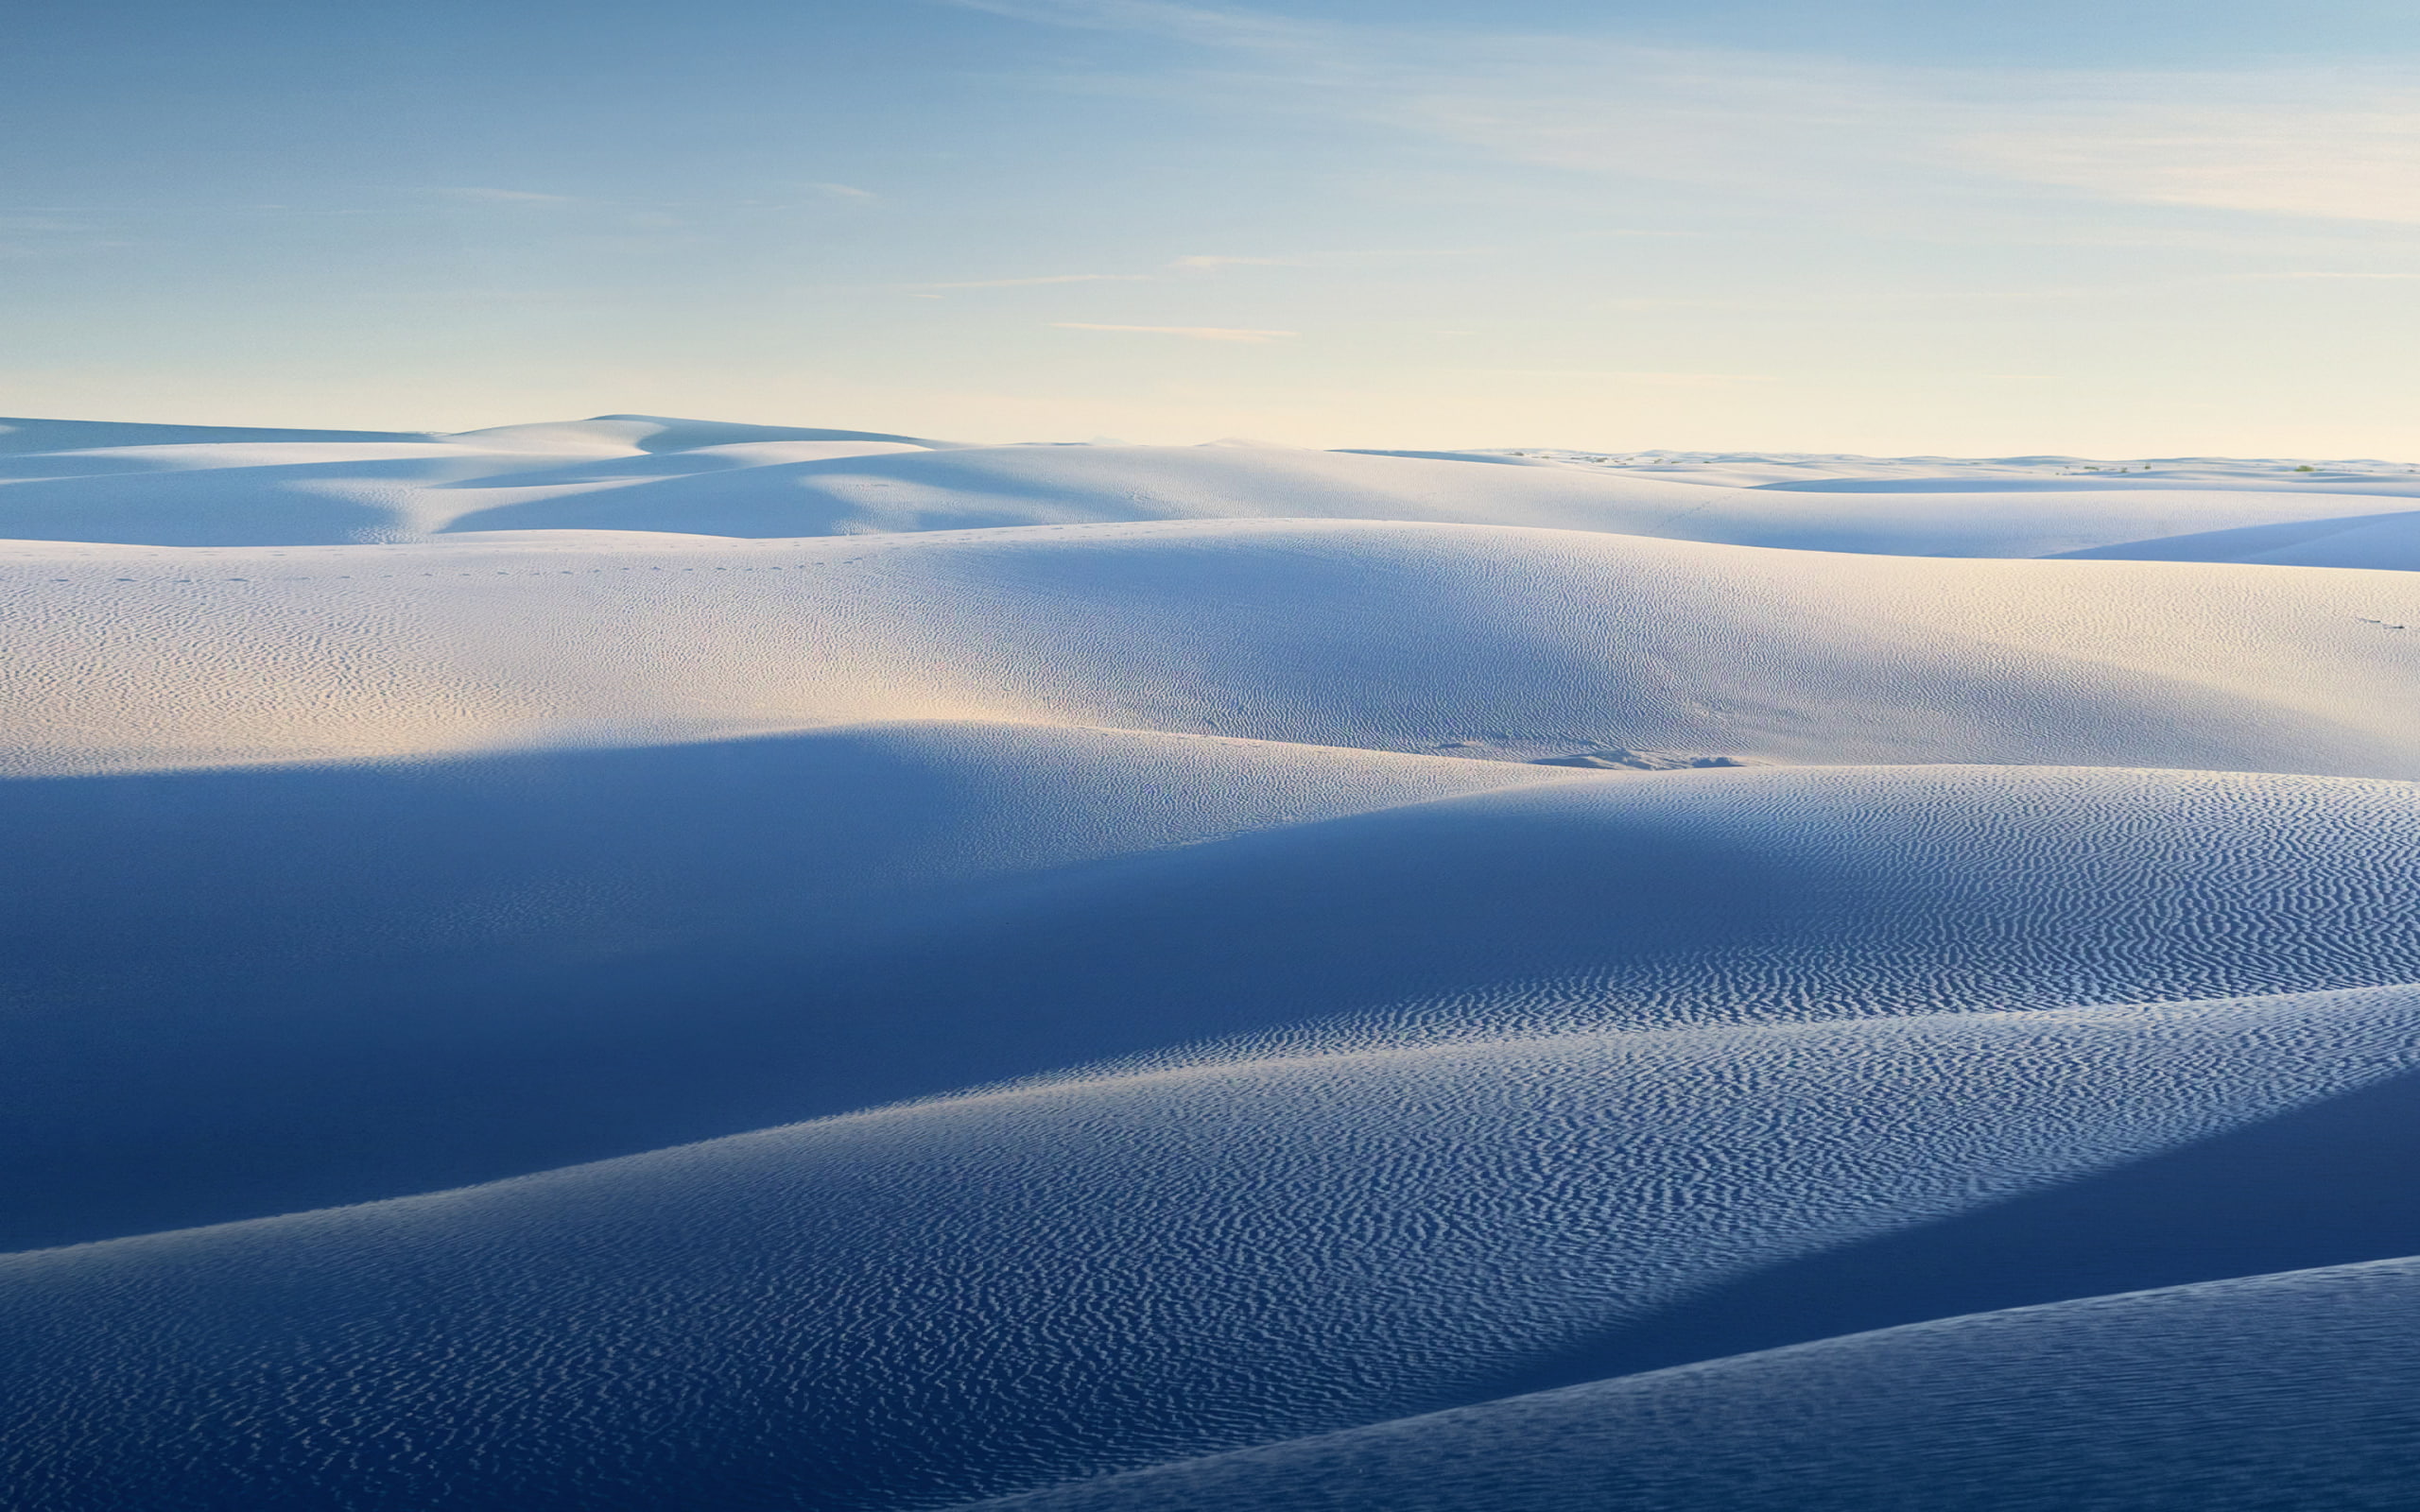 Dunes Galaxy Note 8 Stock QHD, landscape, environment, scenics - nature